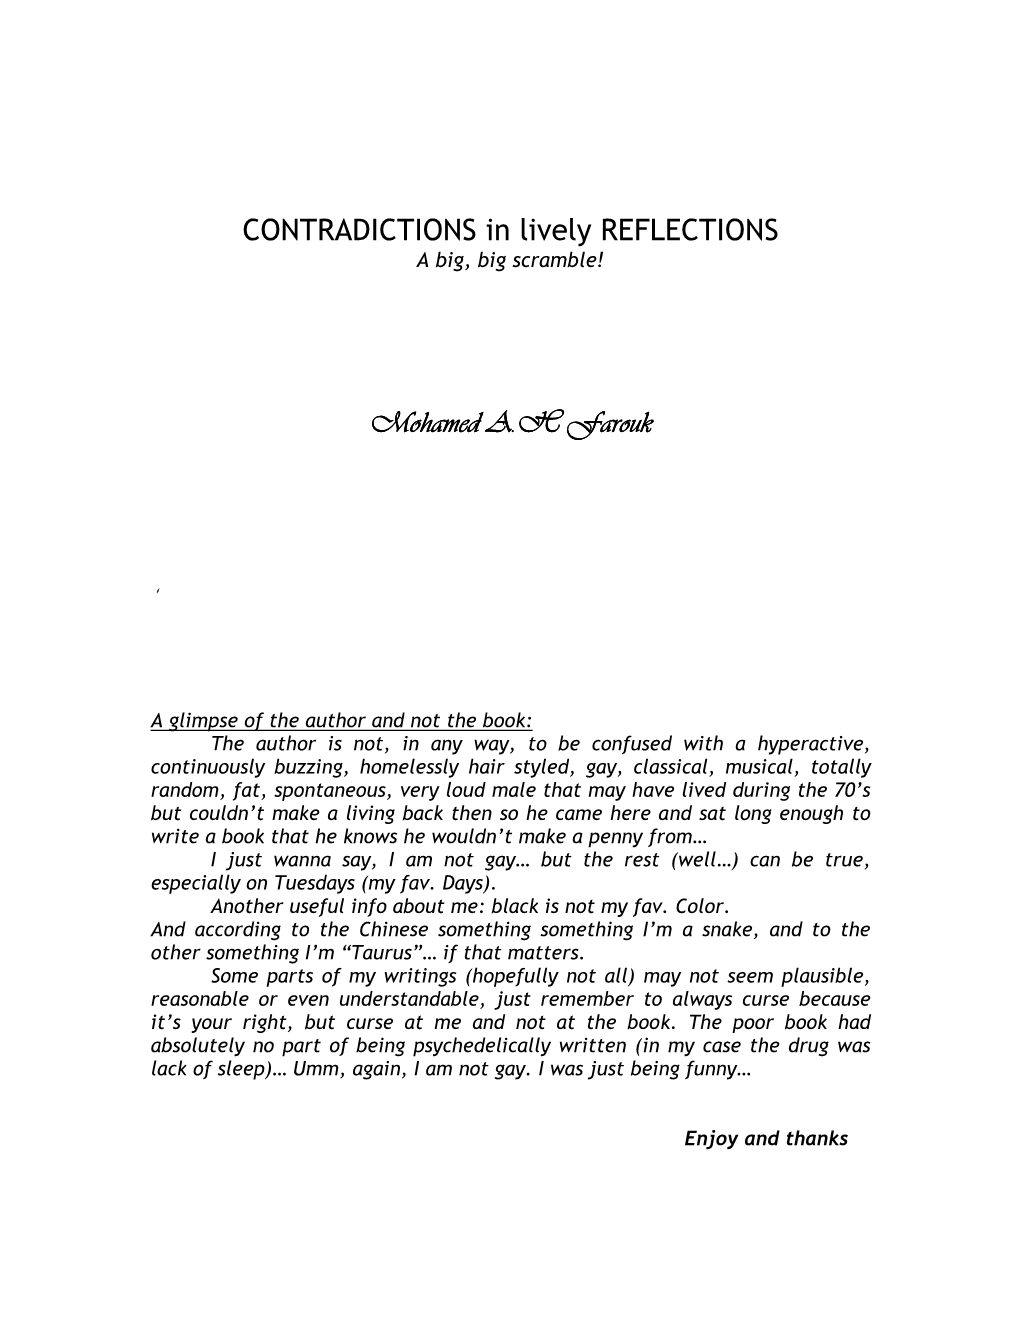 CONTRADICTIONS in Lively REFLECTIONS Mohamed AH Farouk Mohamed AH Farouk